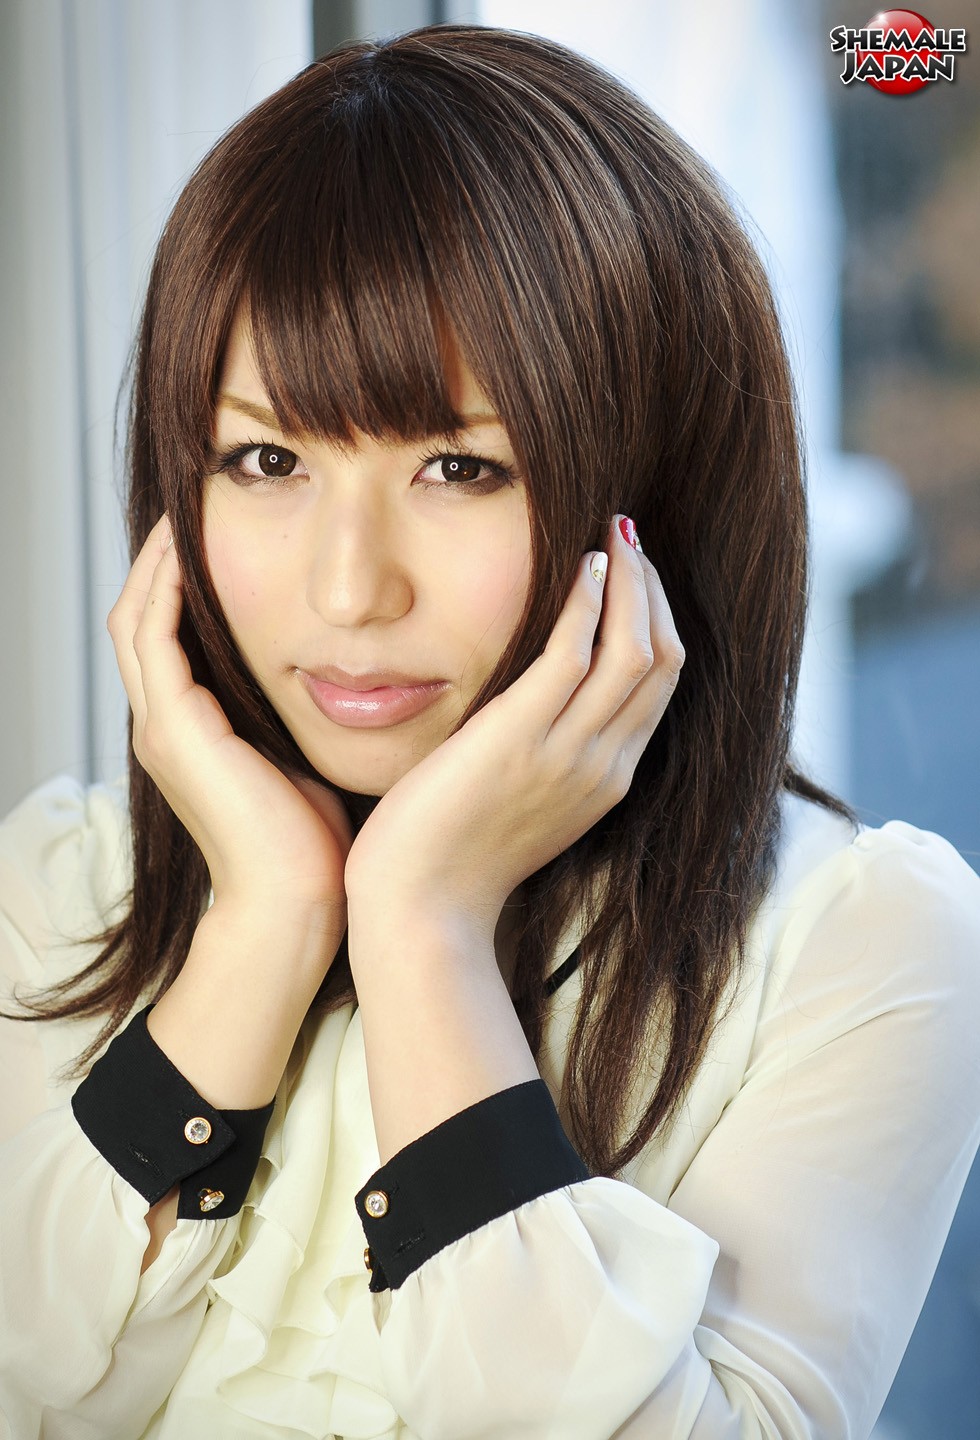 Beautiful Japanese Ladyboys - She is a stunningly beautiful newhalf named Reina Minazuki!